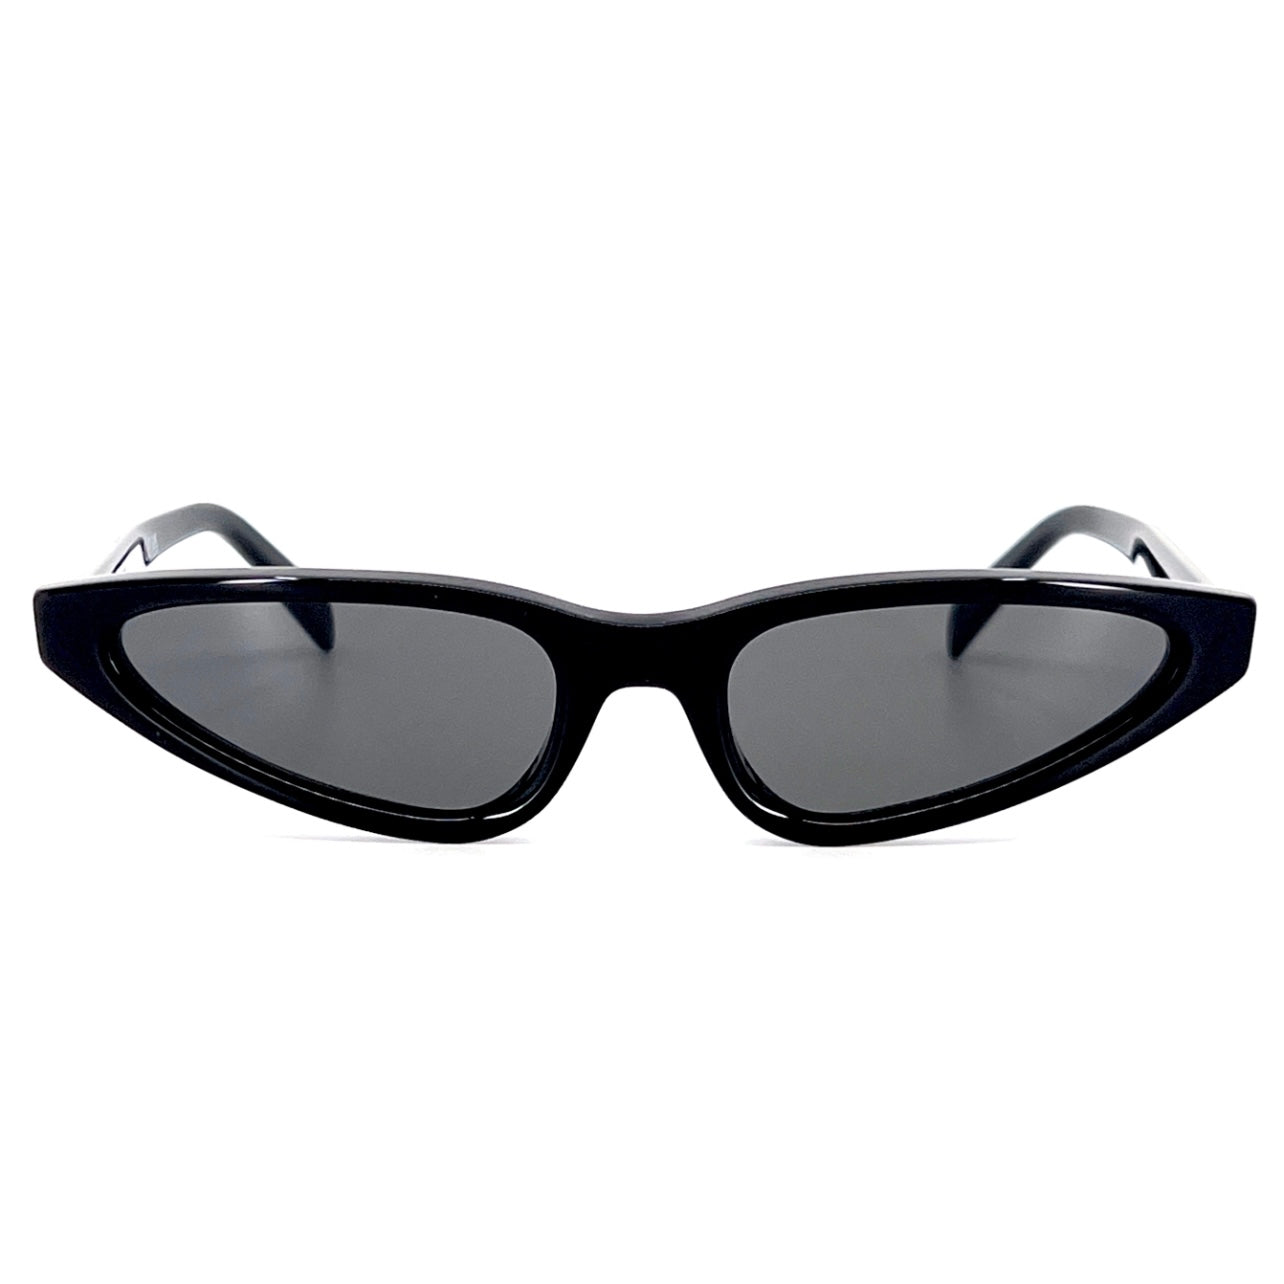 CELINE Sunglasses CL40231I 01A